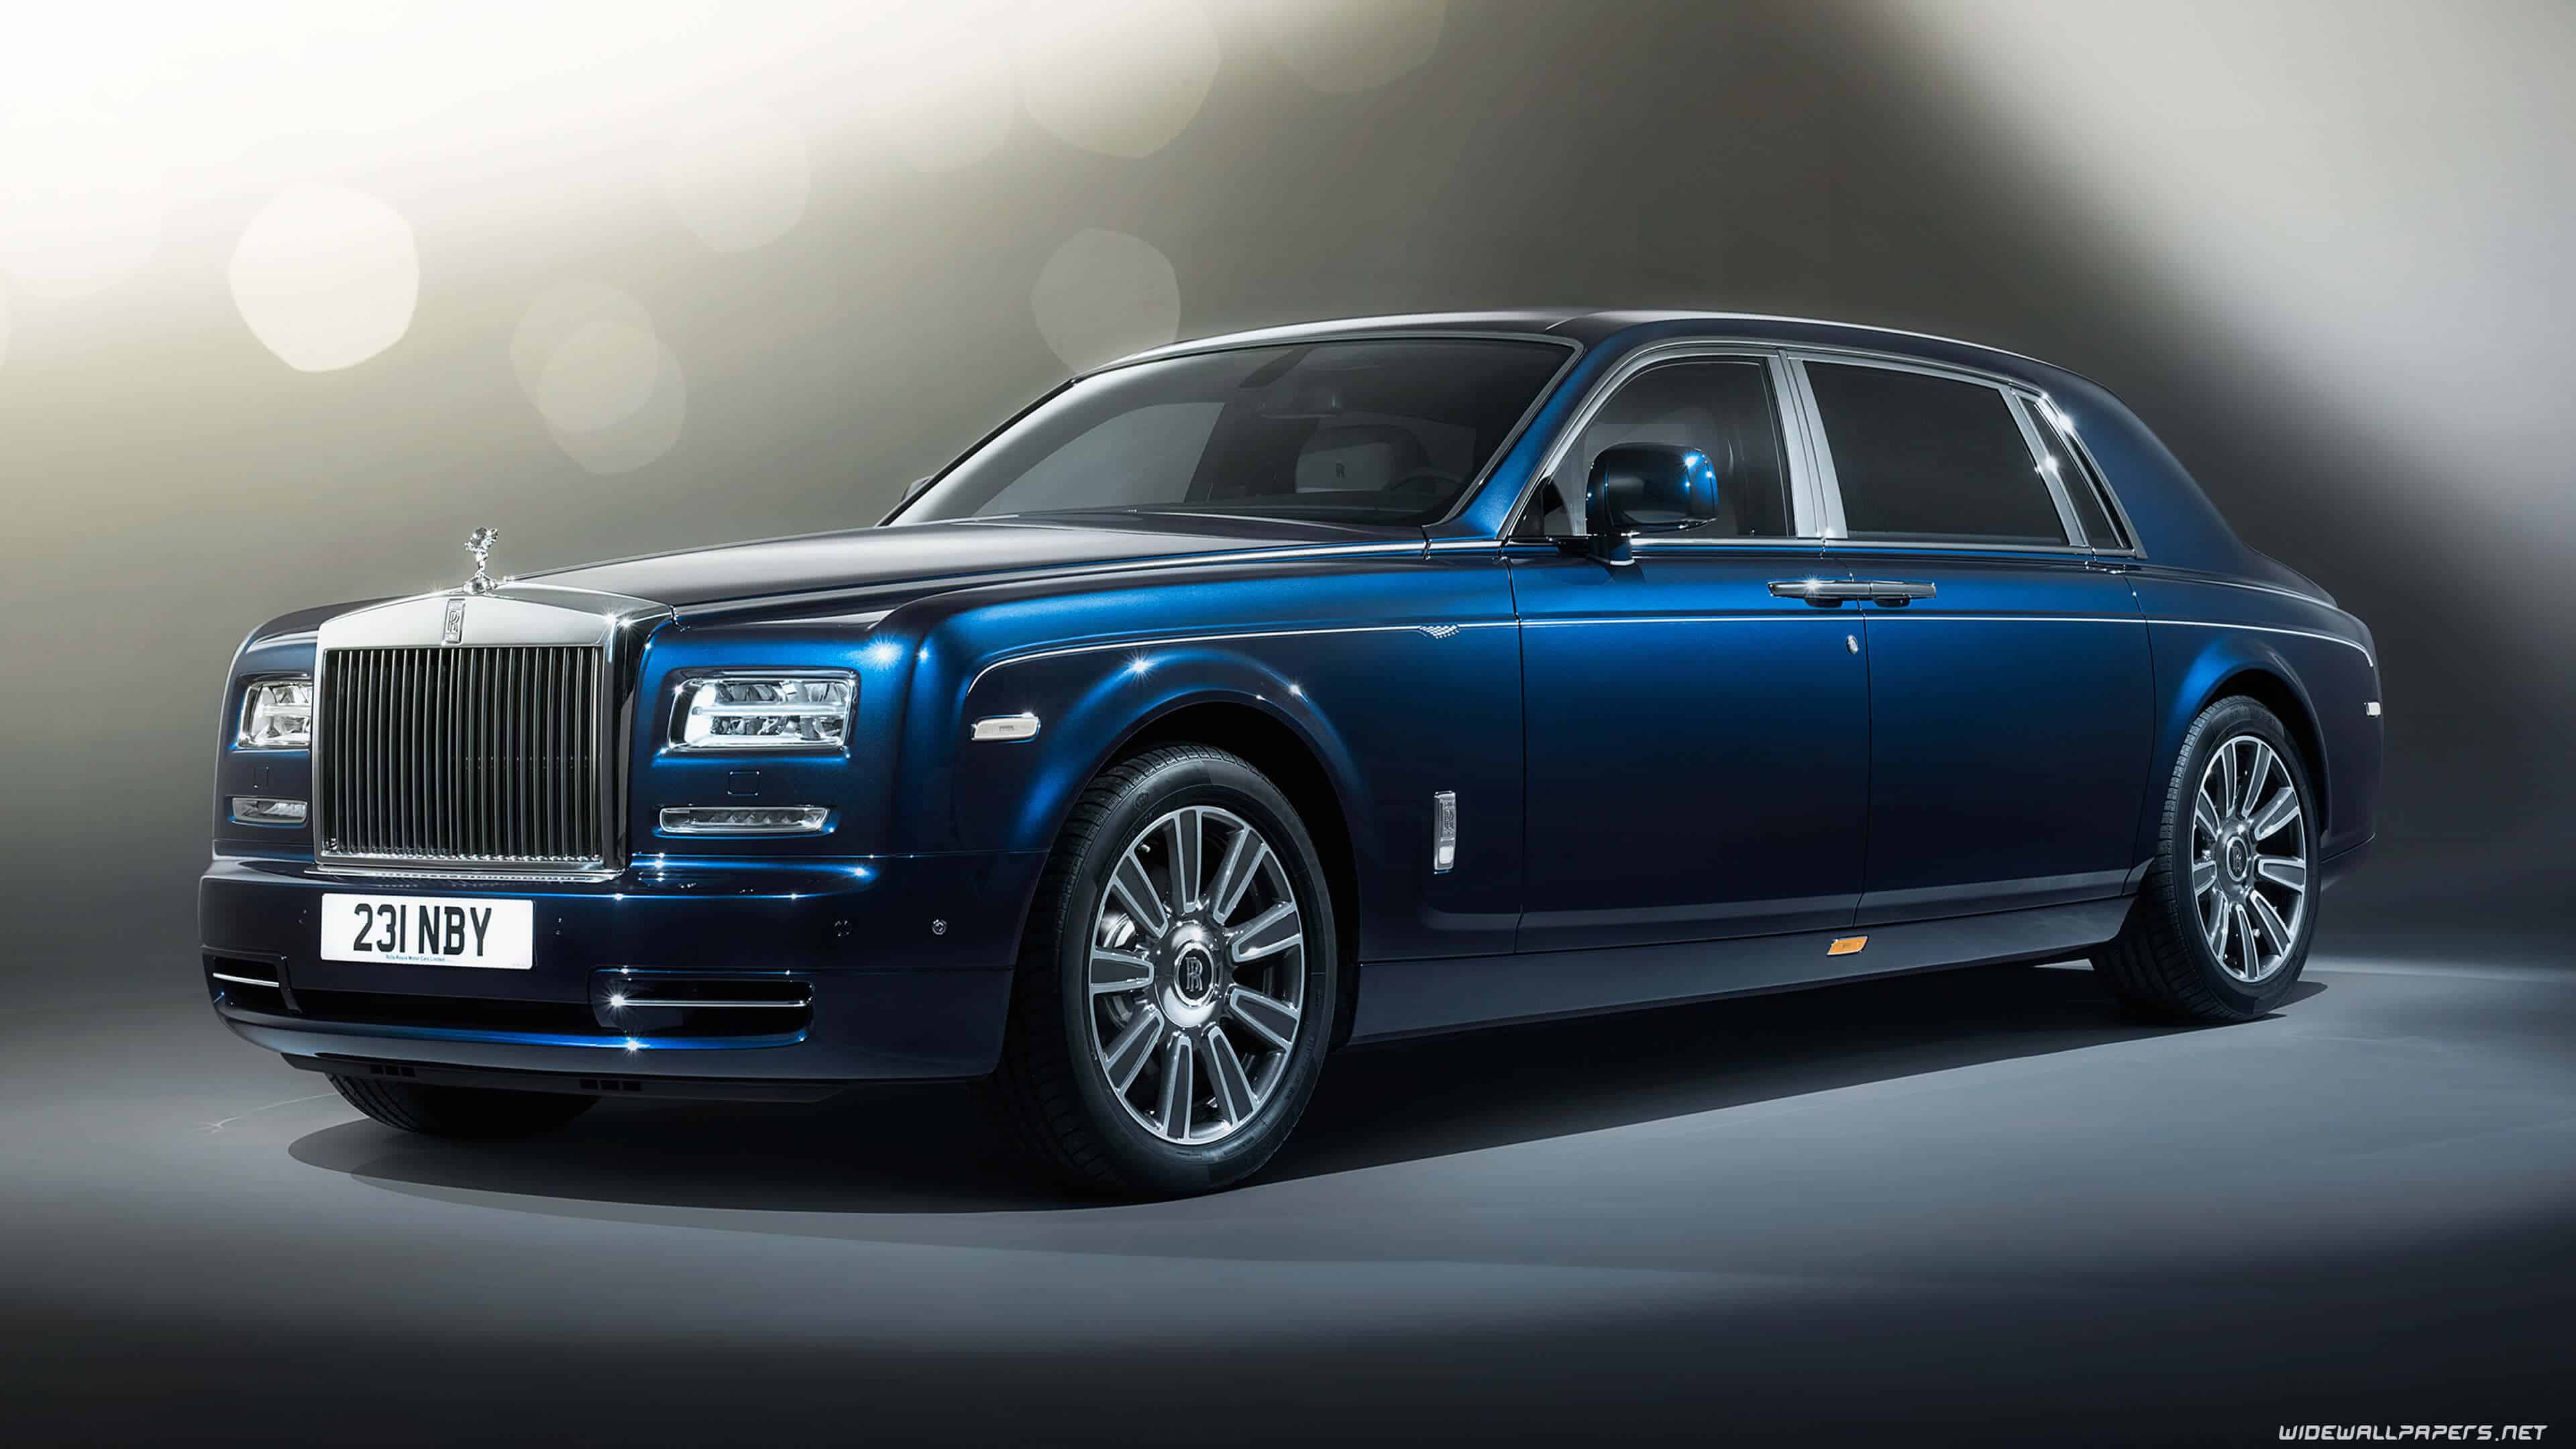 Blue Rolls Royce Phantom UHD 4k Wallpaper Cc